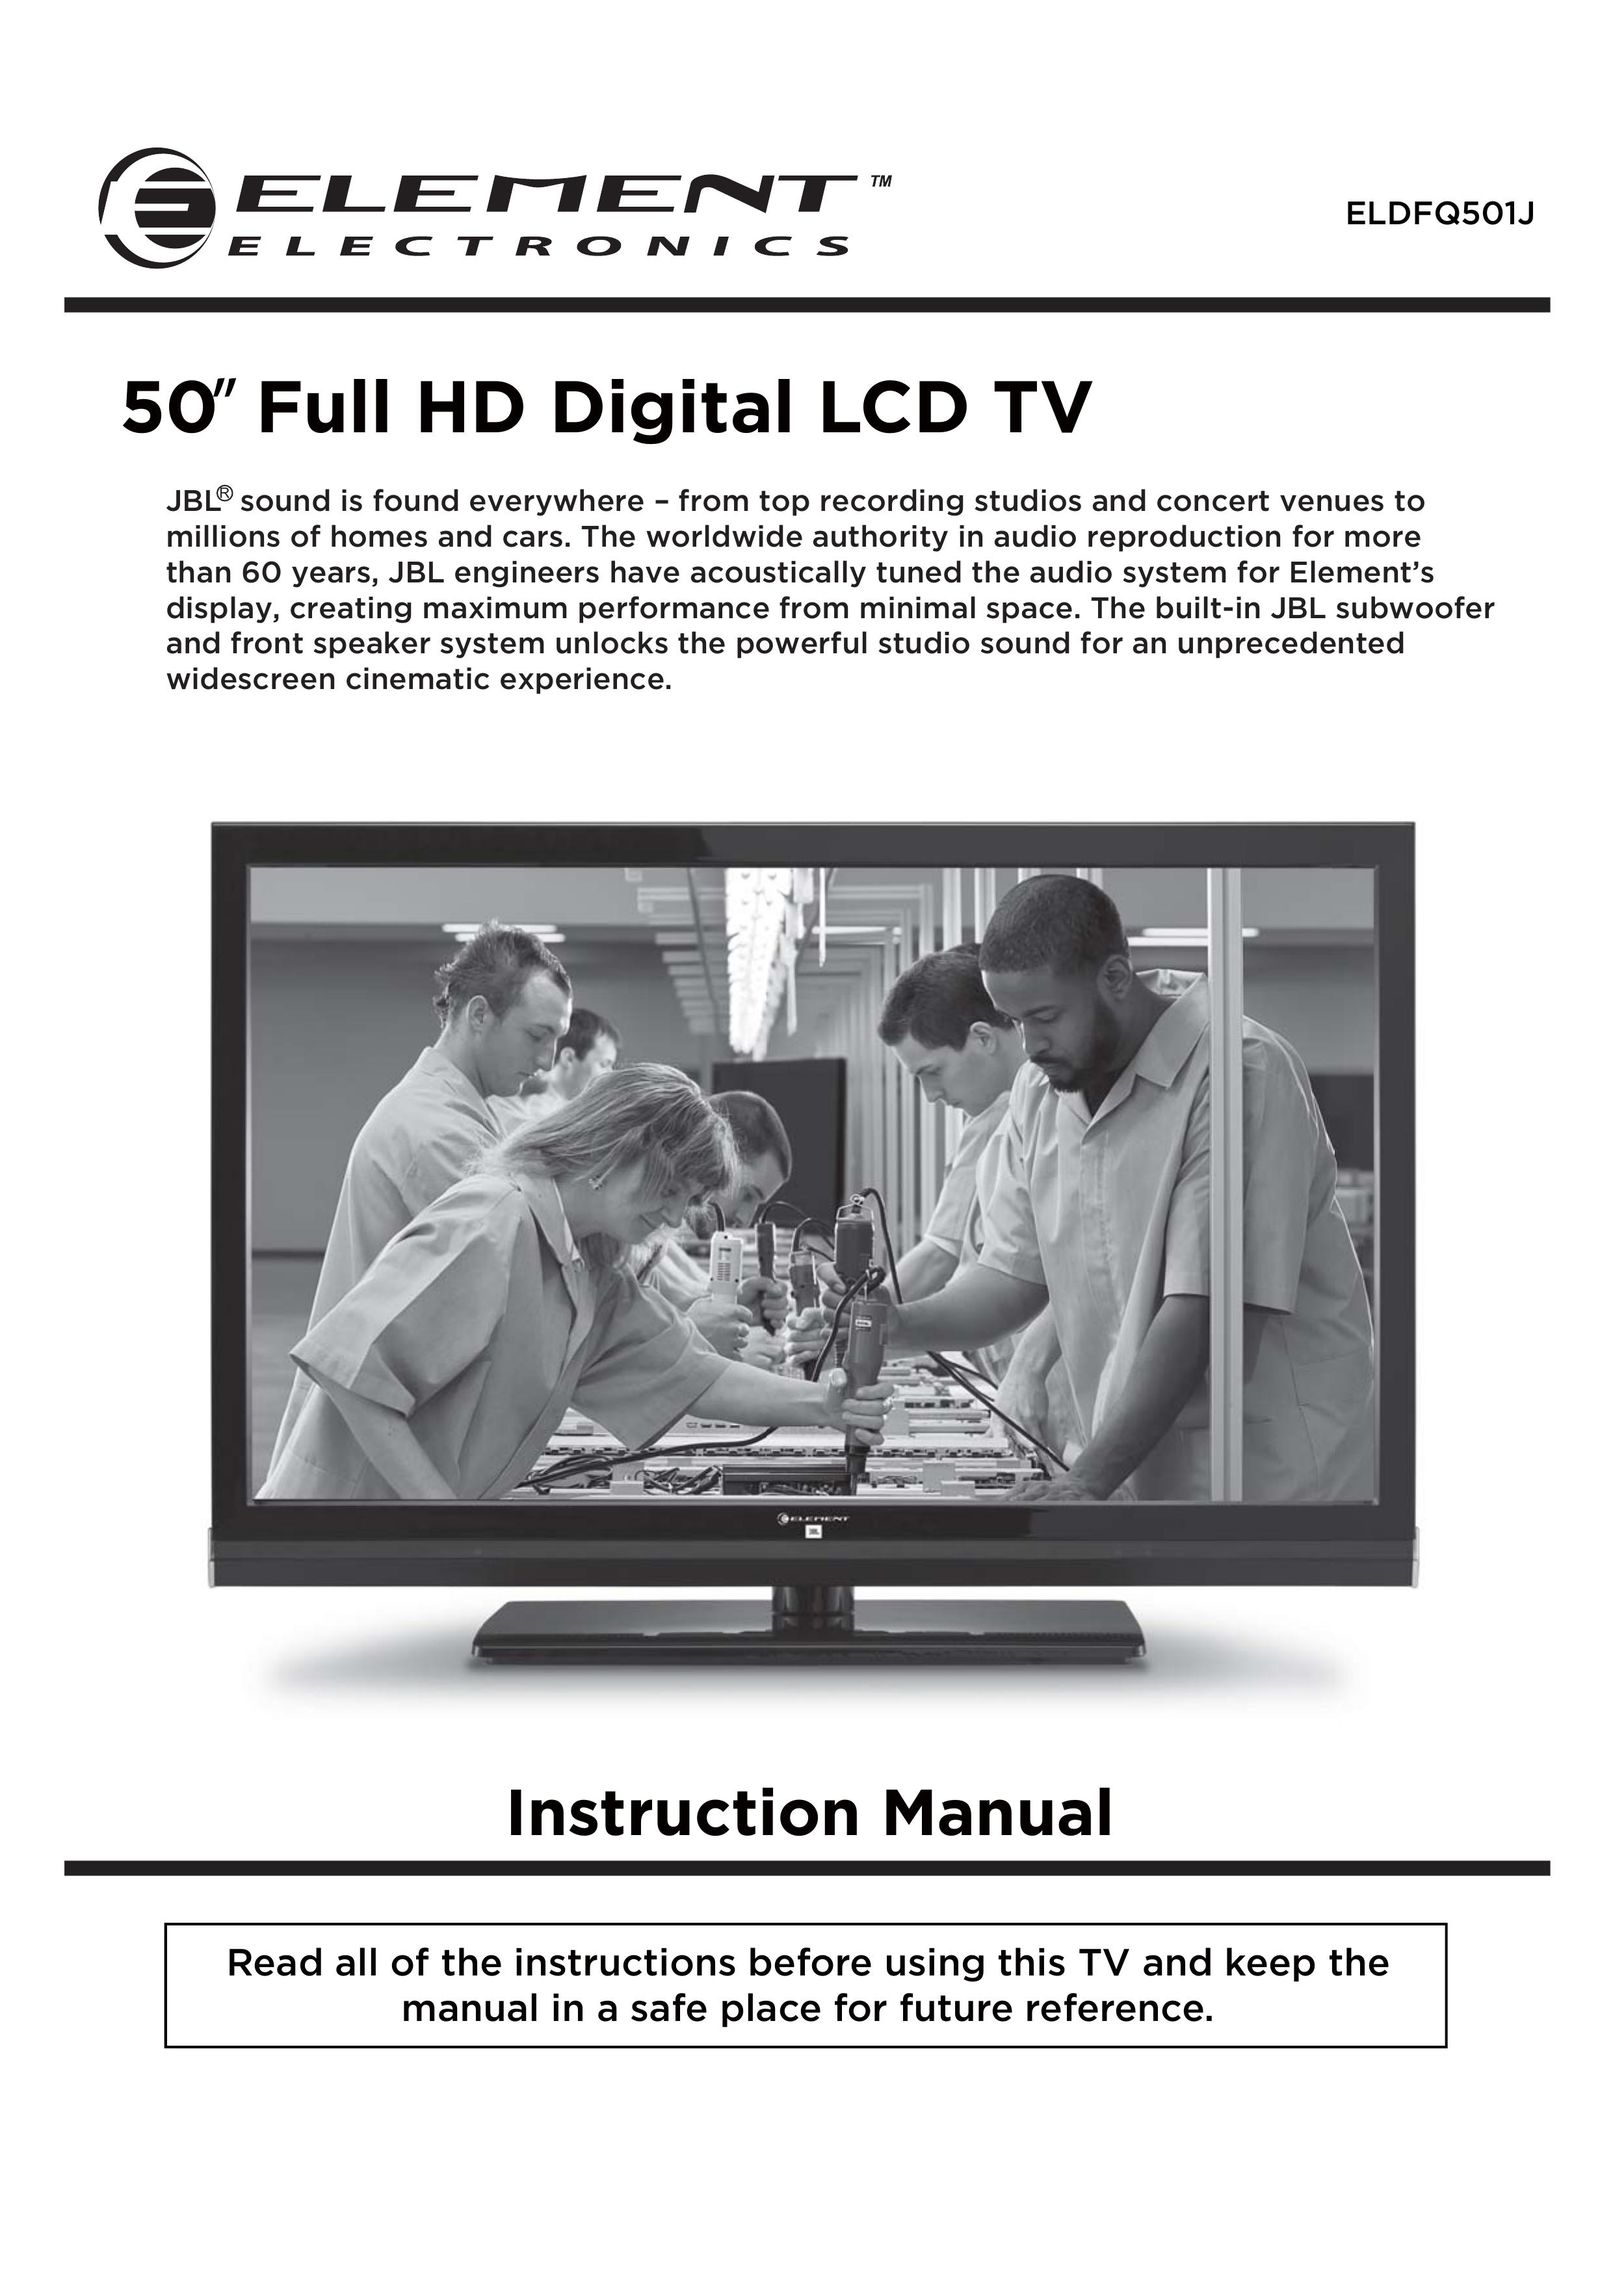 Element Electronics eldfqso1j CRT Television User Manual